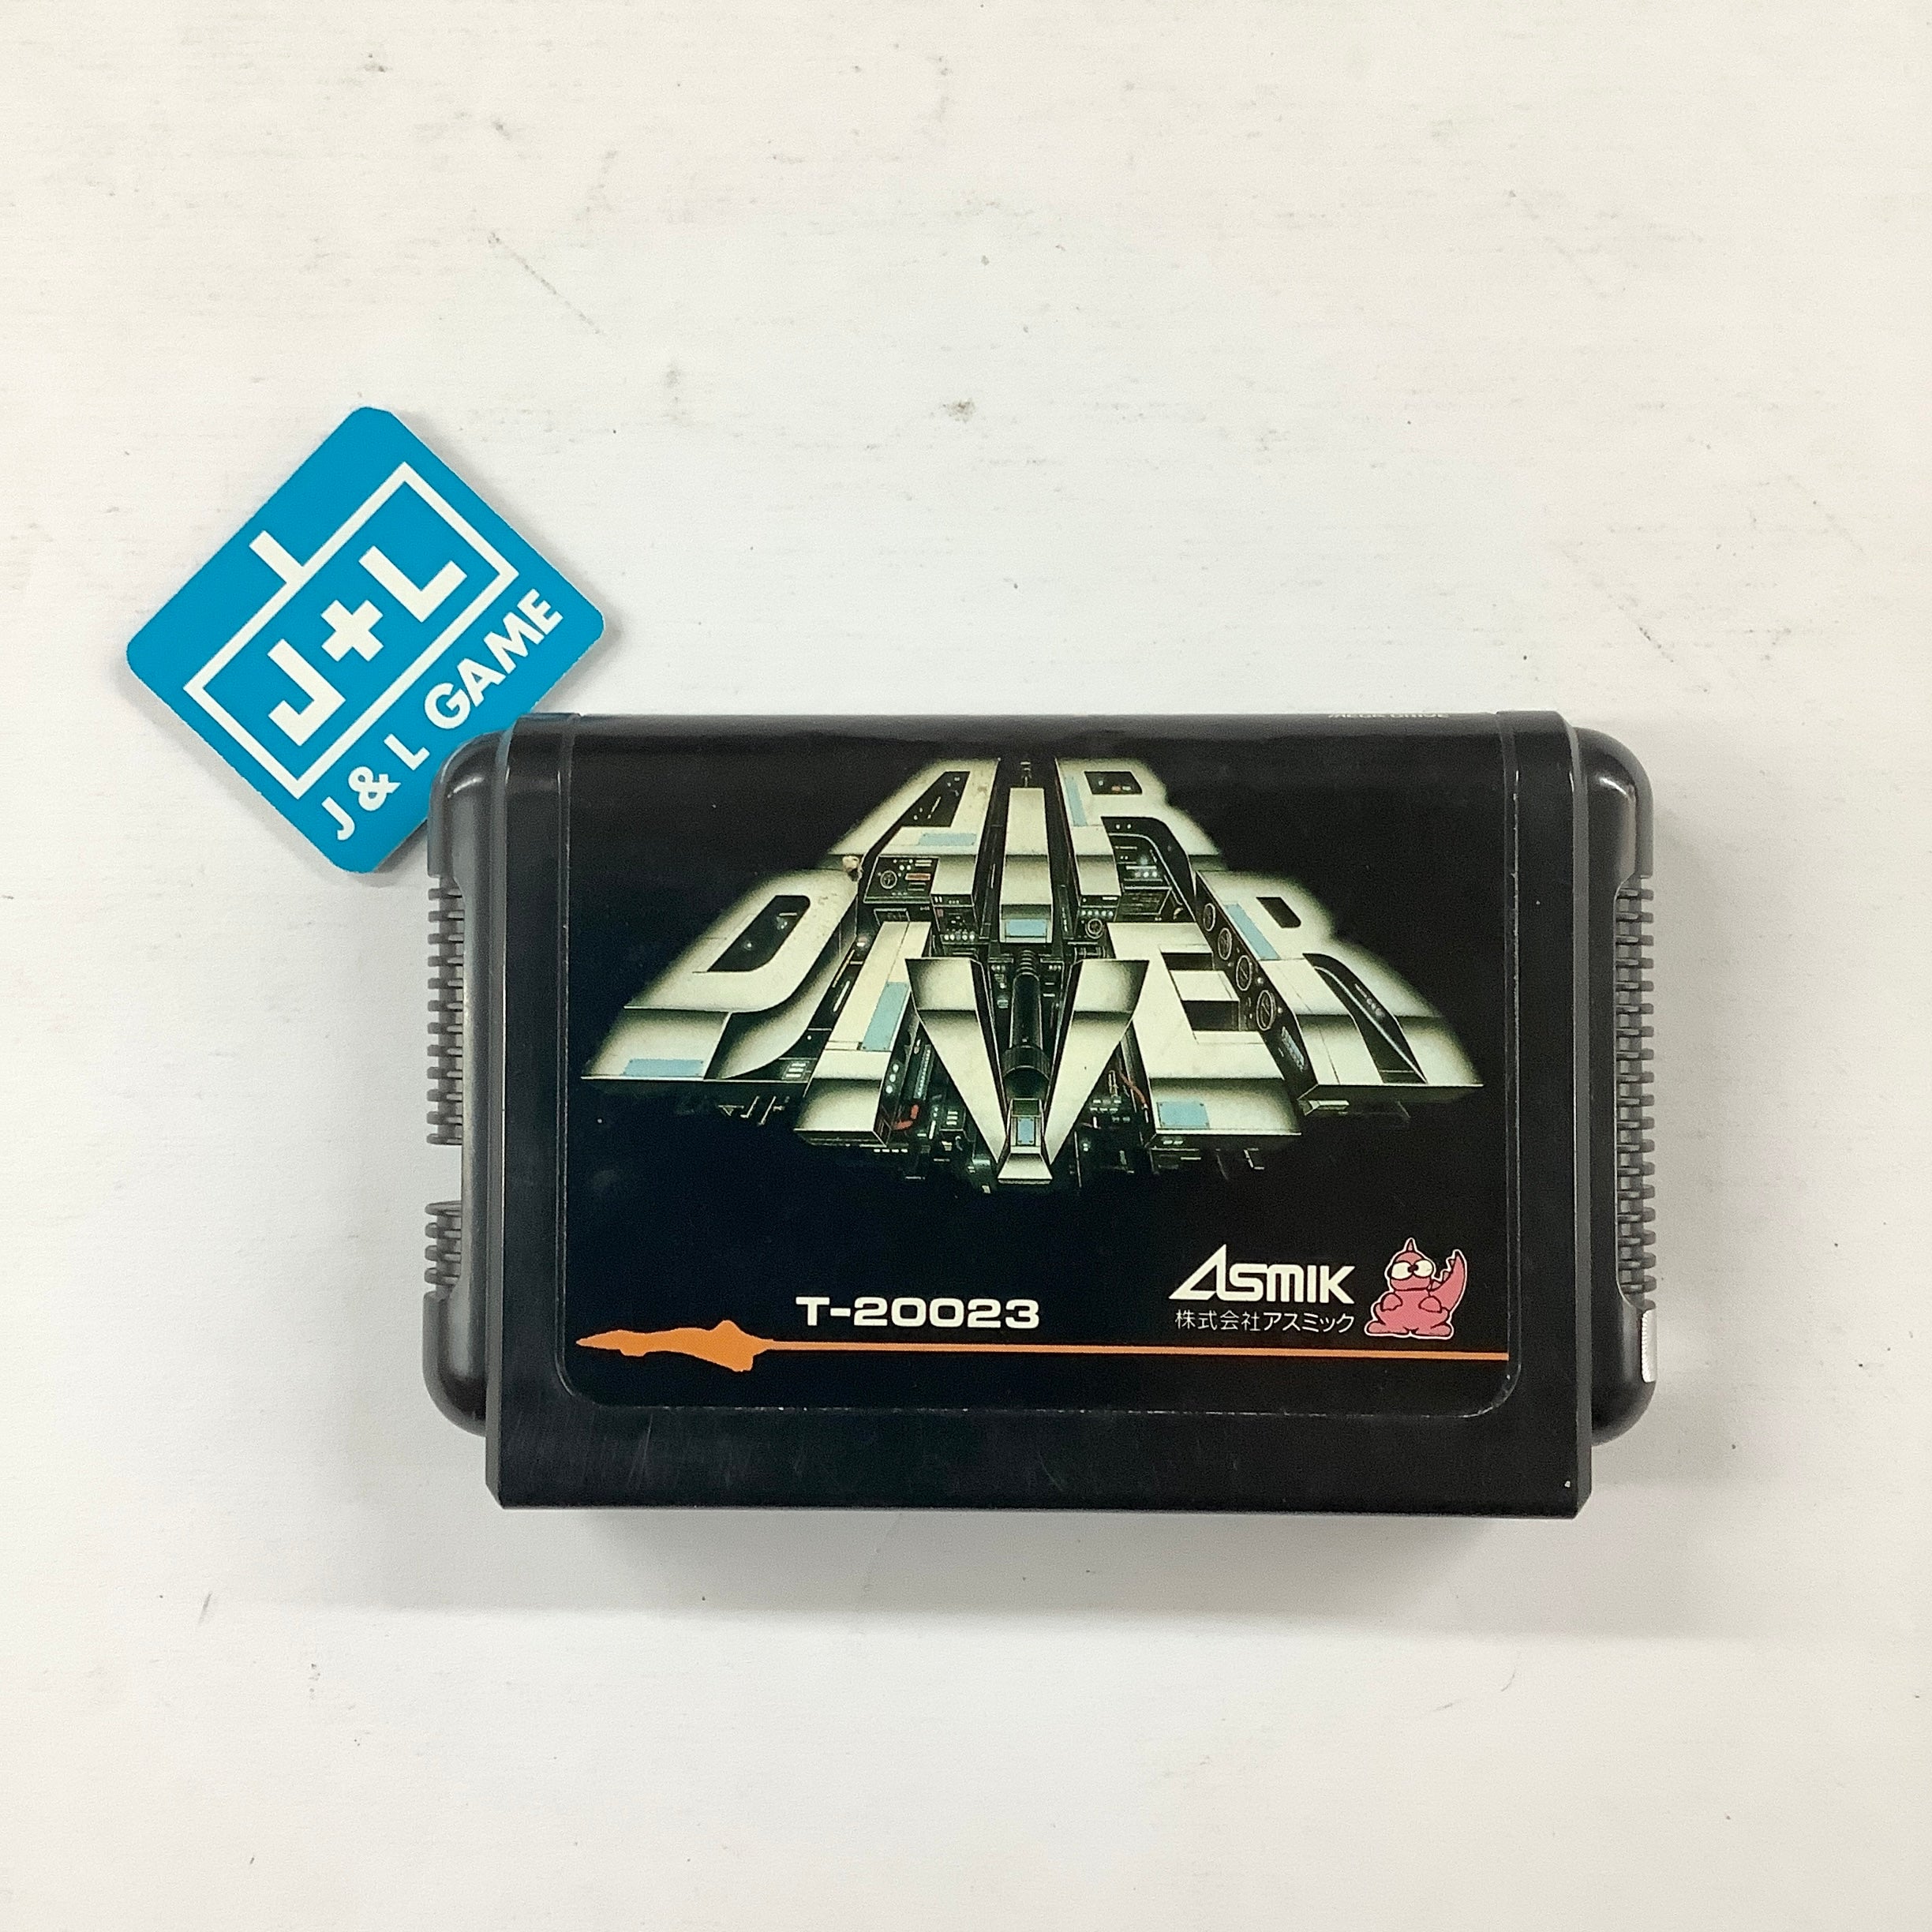 Air Diver - (SG) SEGA Mega Drive [Pre-Owned] (Japanese Import) Video Games Asmik Ace Entertainment, Inc   